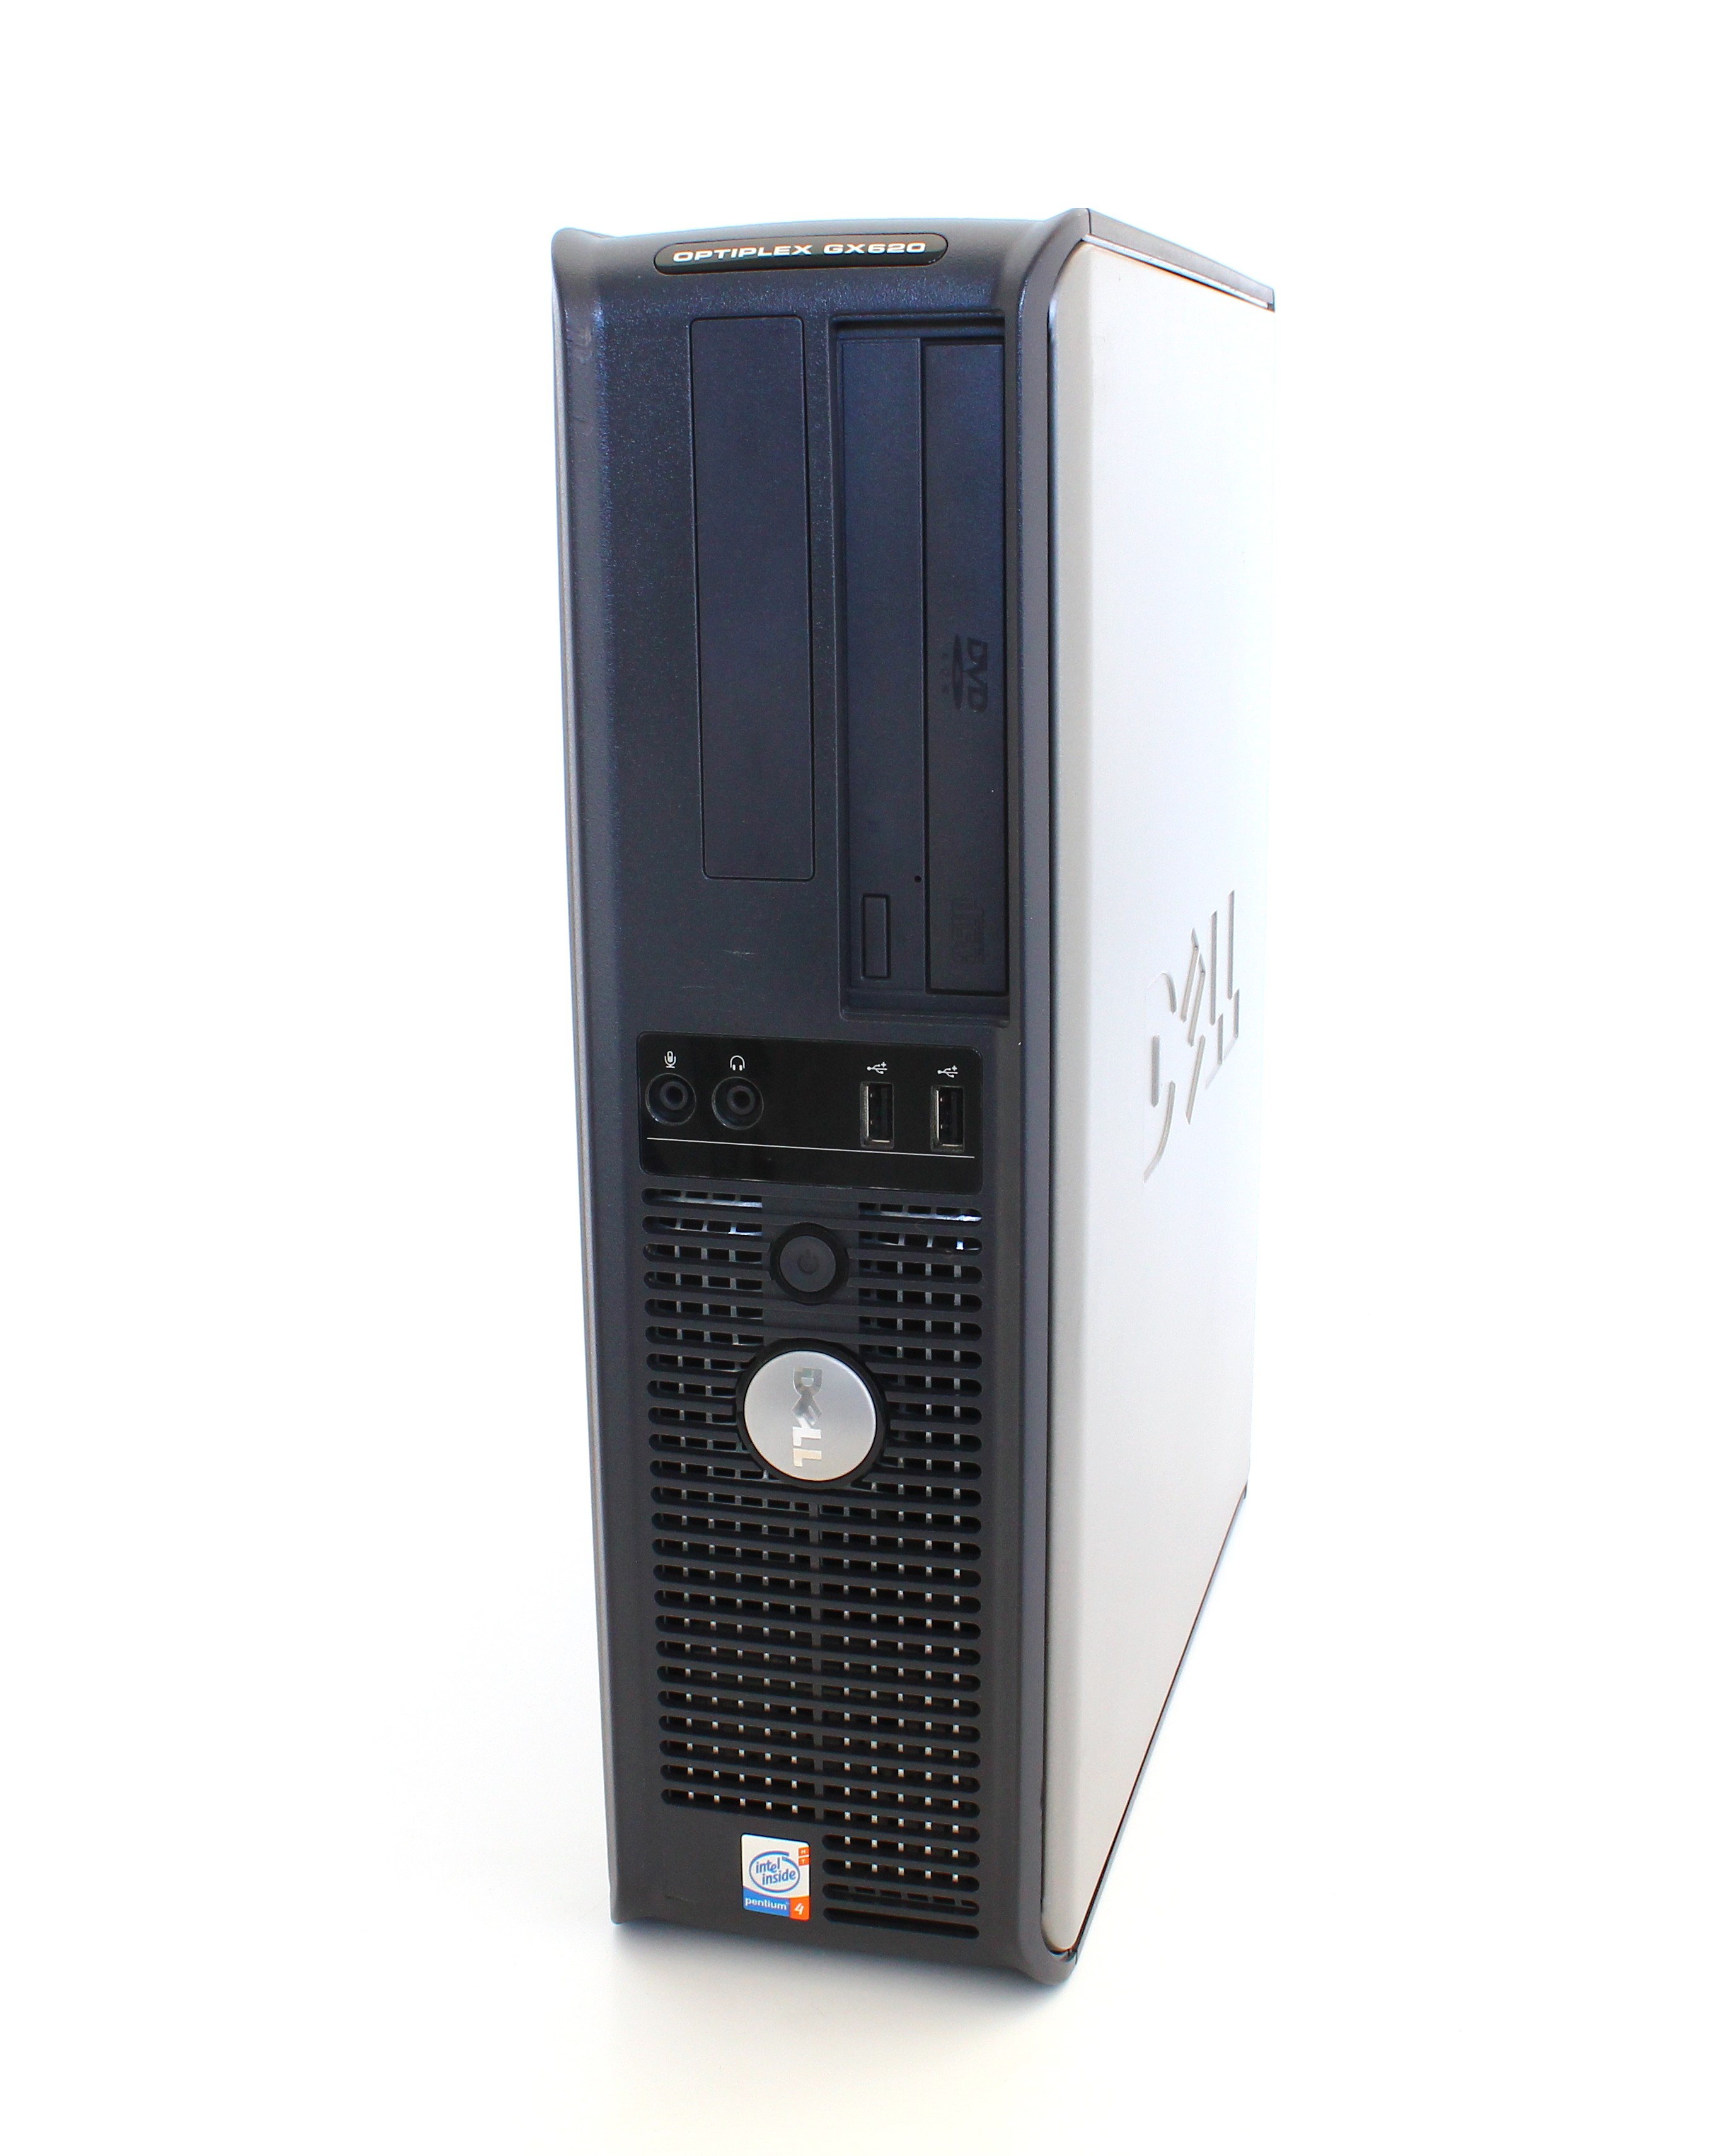 Dell Optiplex GX620 Small form factor Desktop Computer, 1000g, 4g, DVD, Windows XP Professional